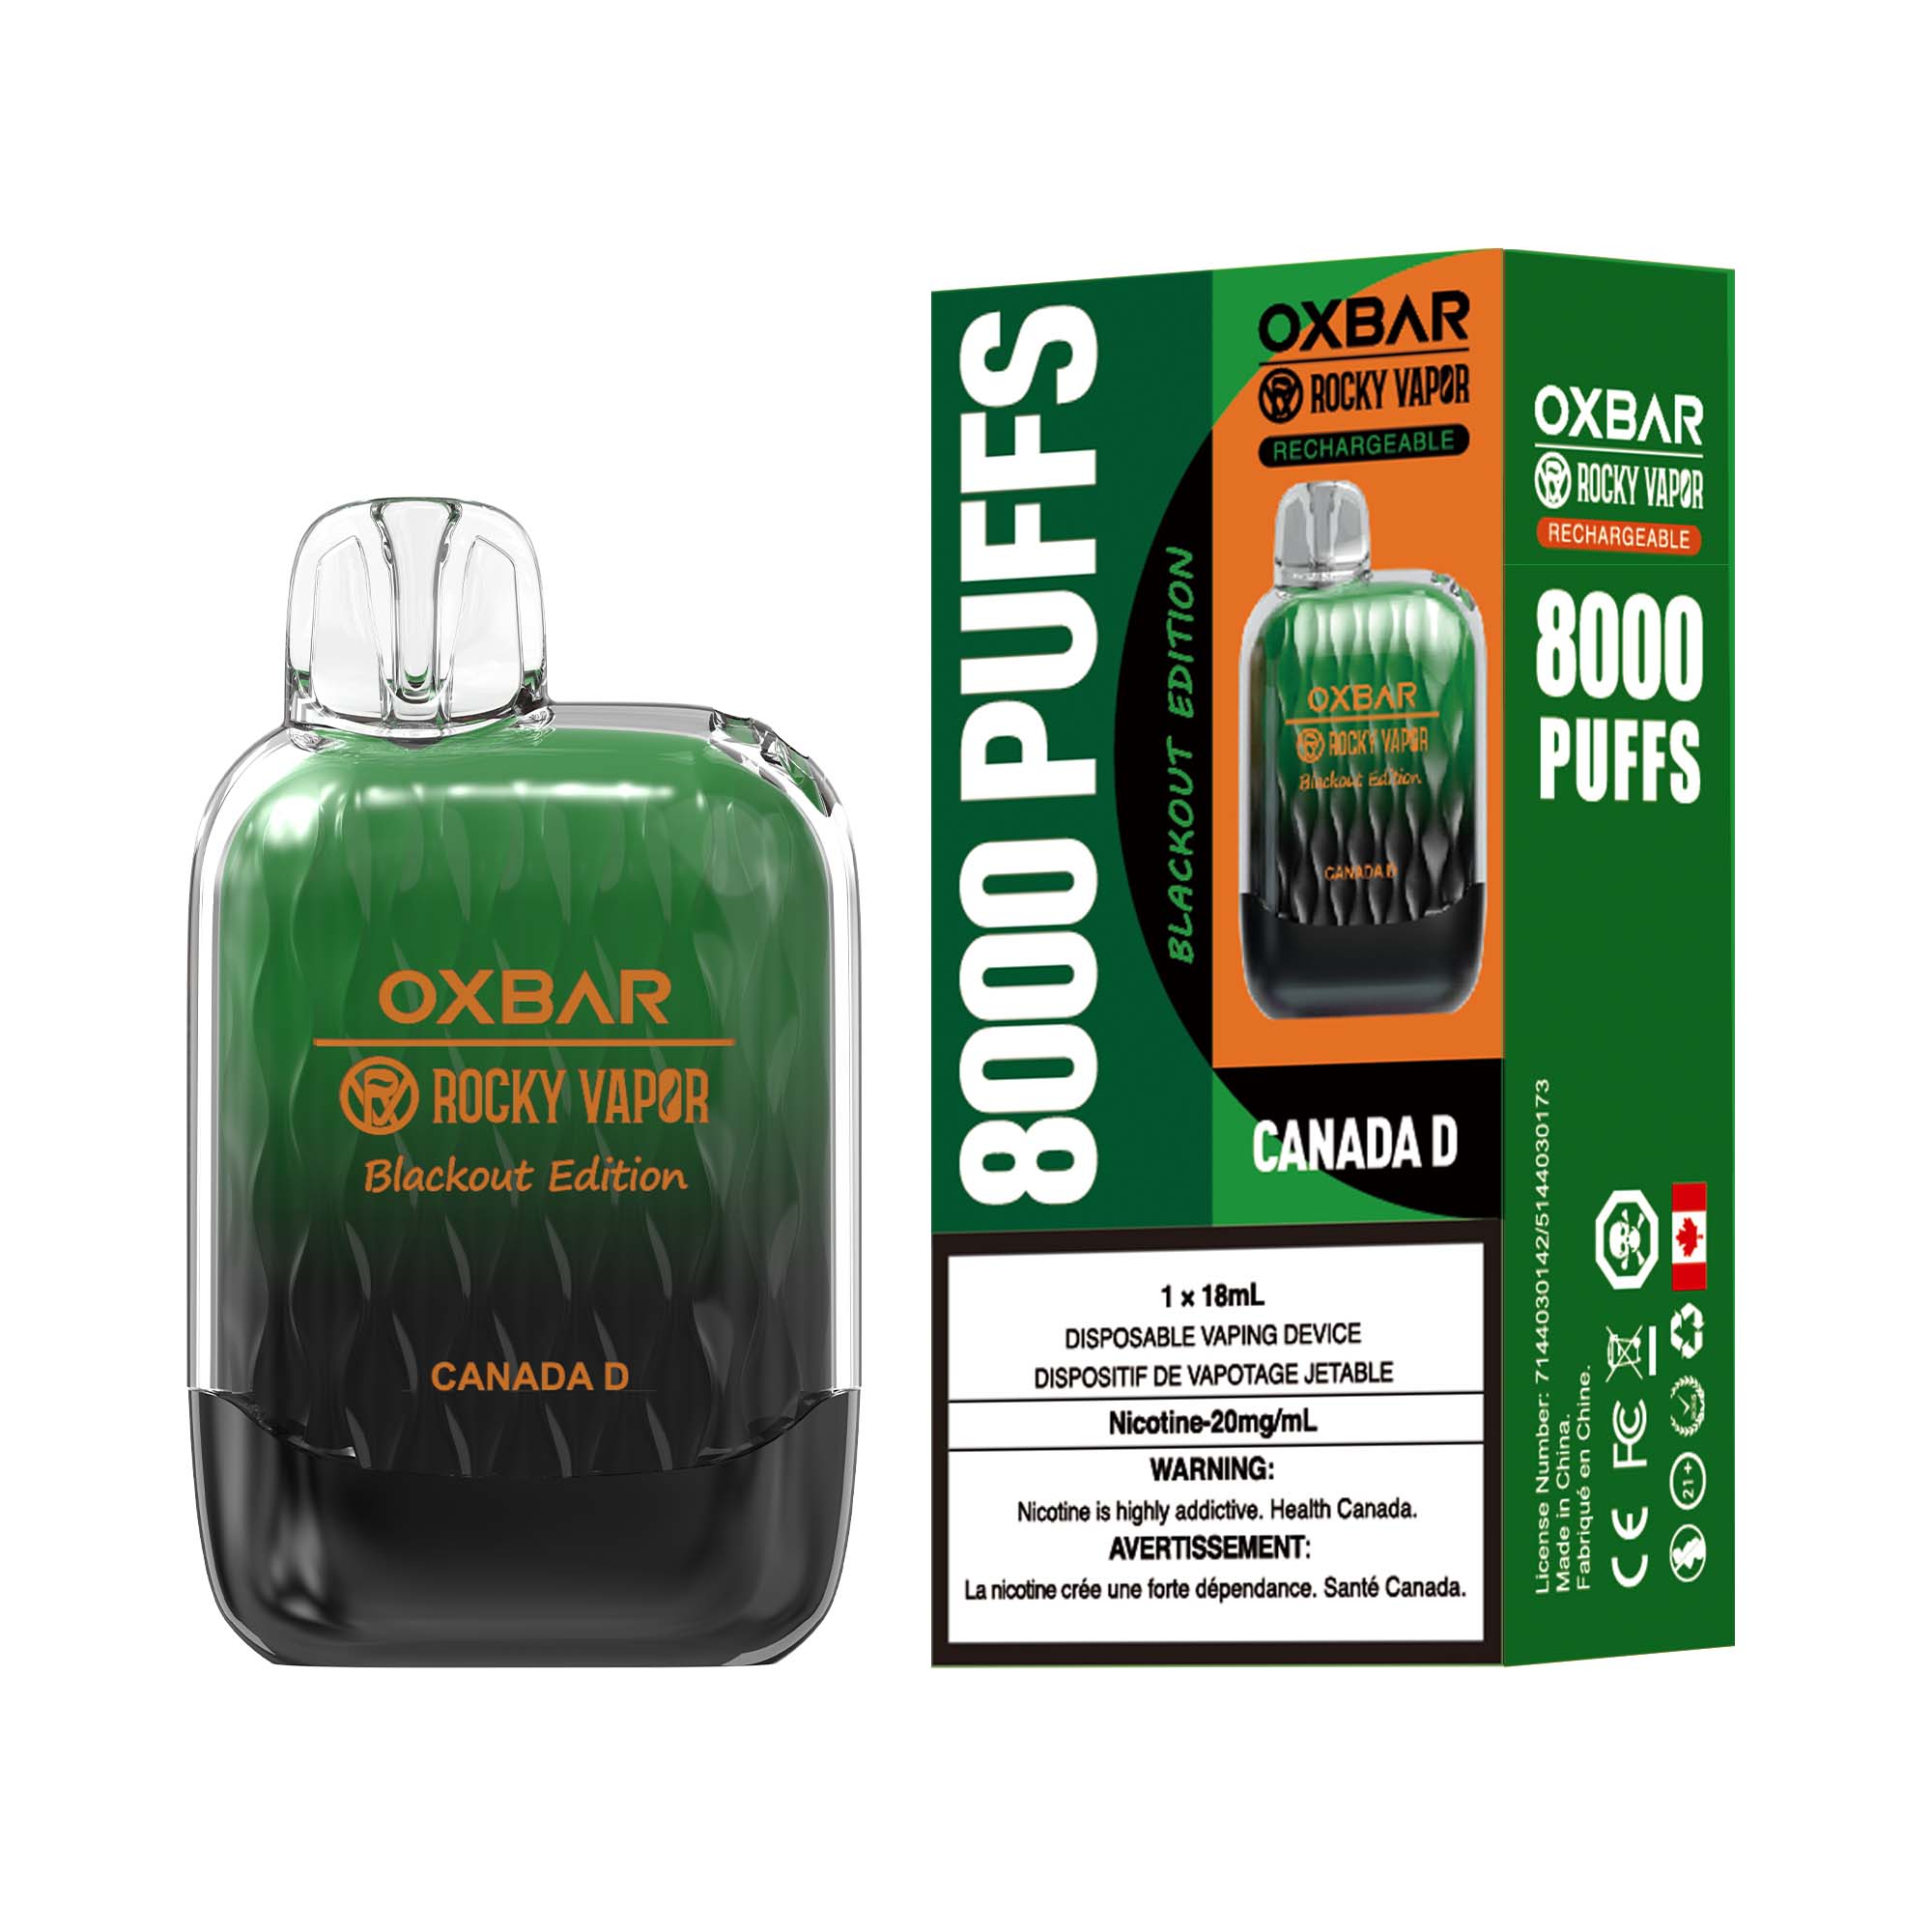 OXBAR x Rocky Vapor G8000 - Canada D Disposable Vape available on Canada online vape shop